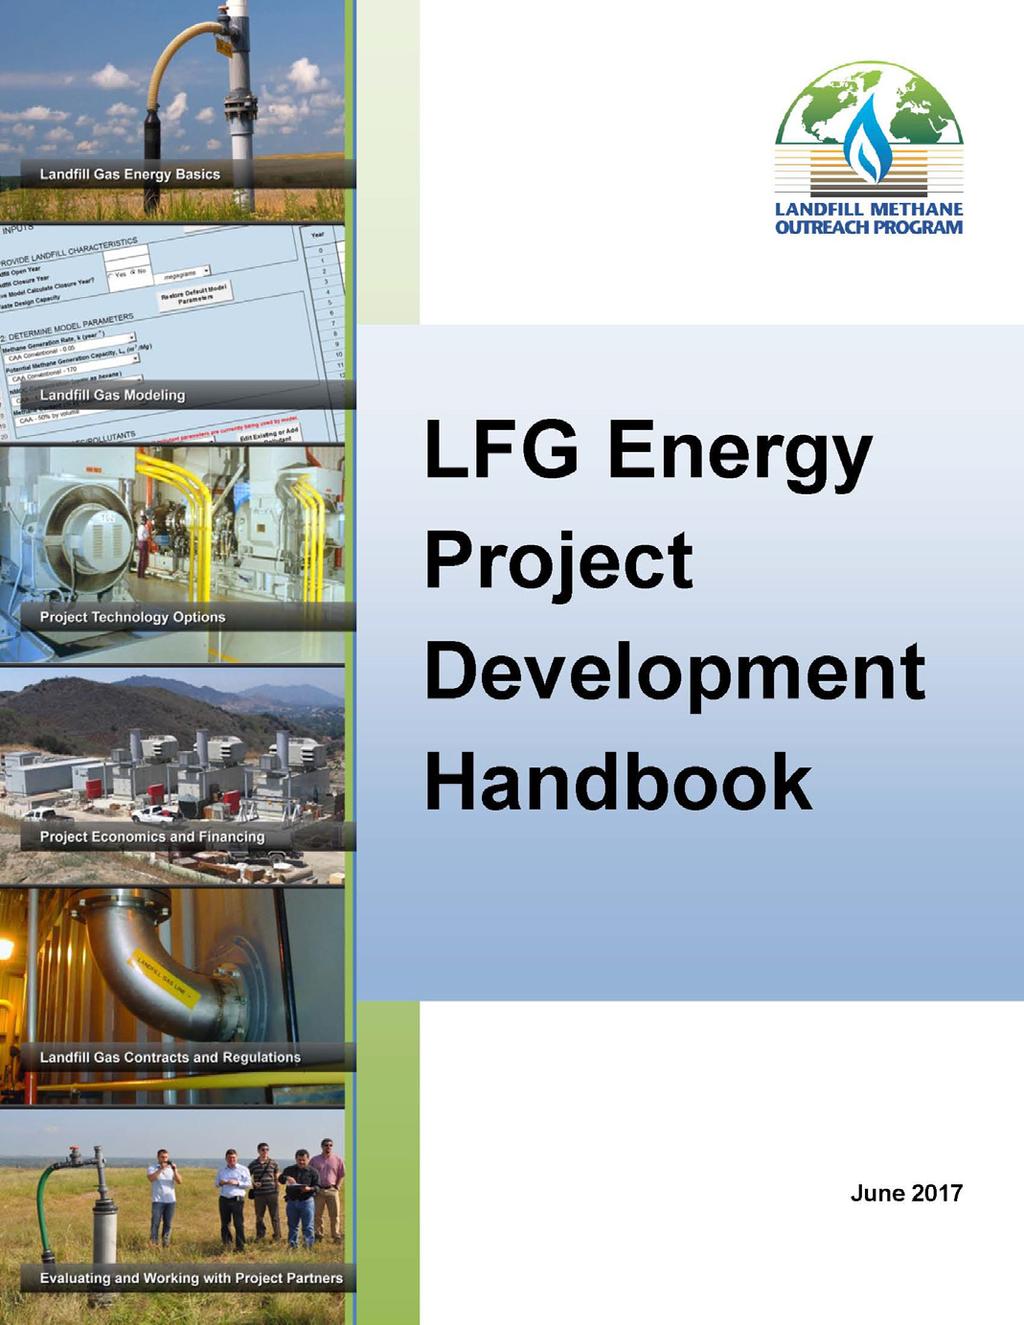 LMOP Resources: Handbook Available at epa.